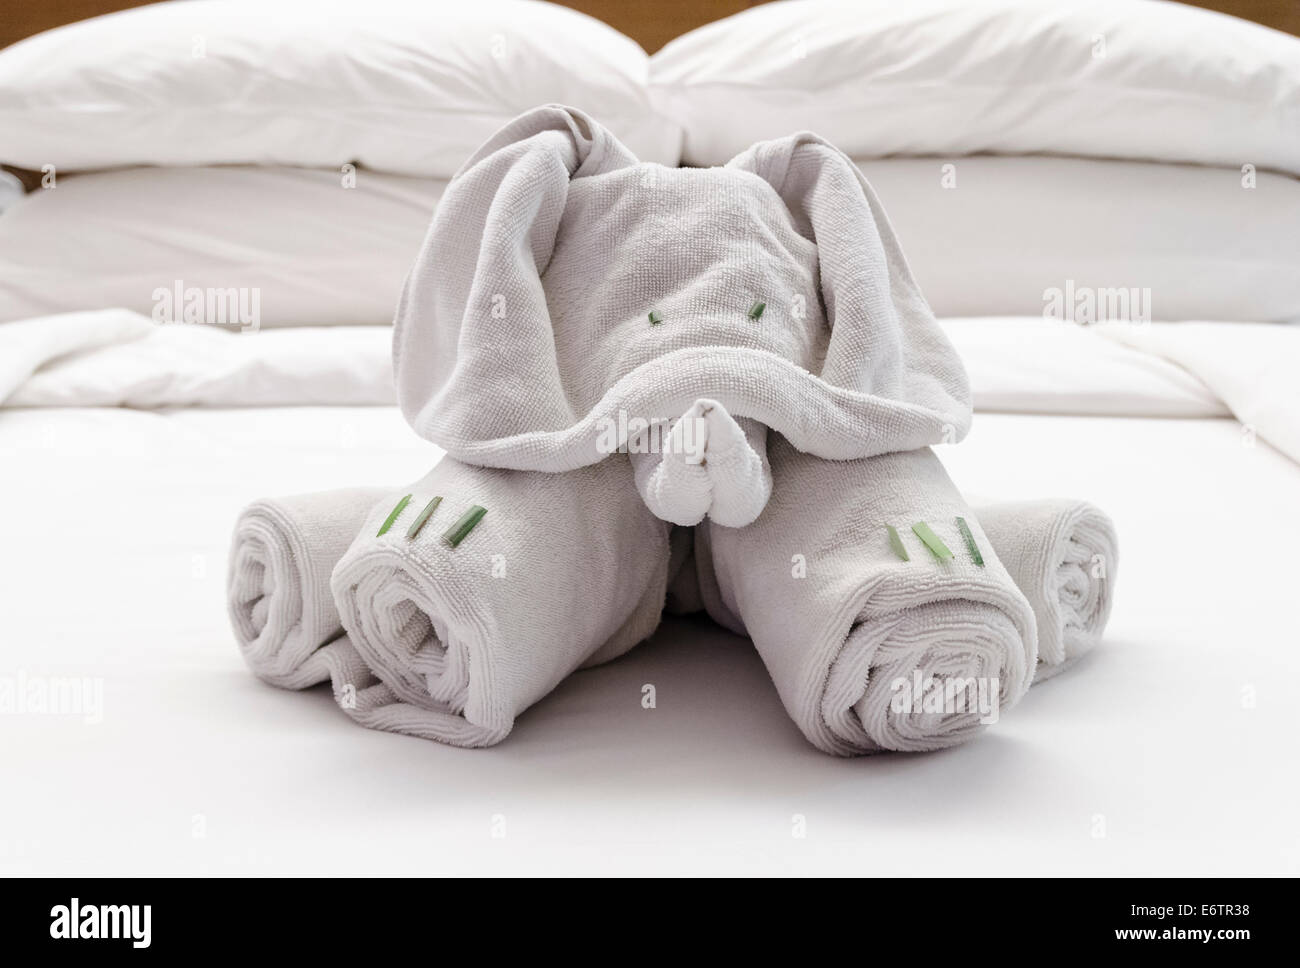 Elephant towel -Fotos und -Bildmaterial in hoher Auflösung – Alamy